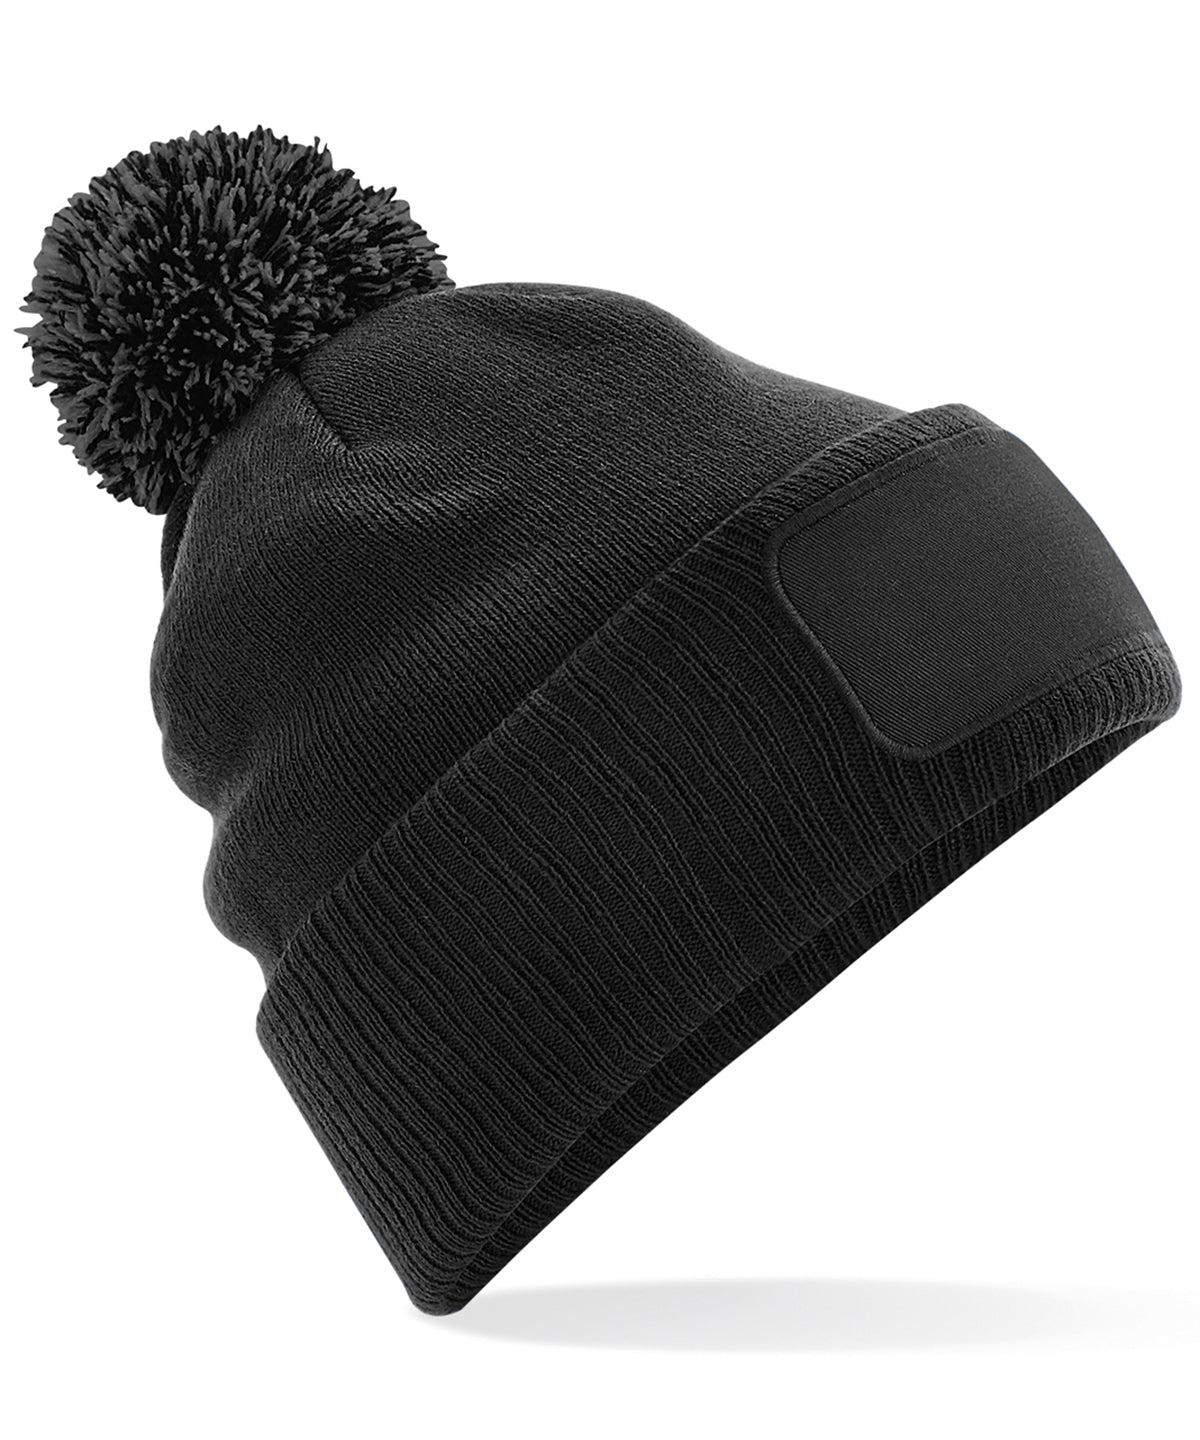 Personalised Hats - Black Beechfield Snowstar® patch beanie